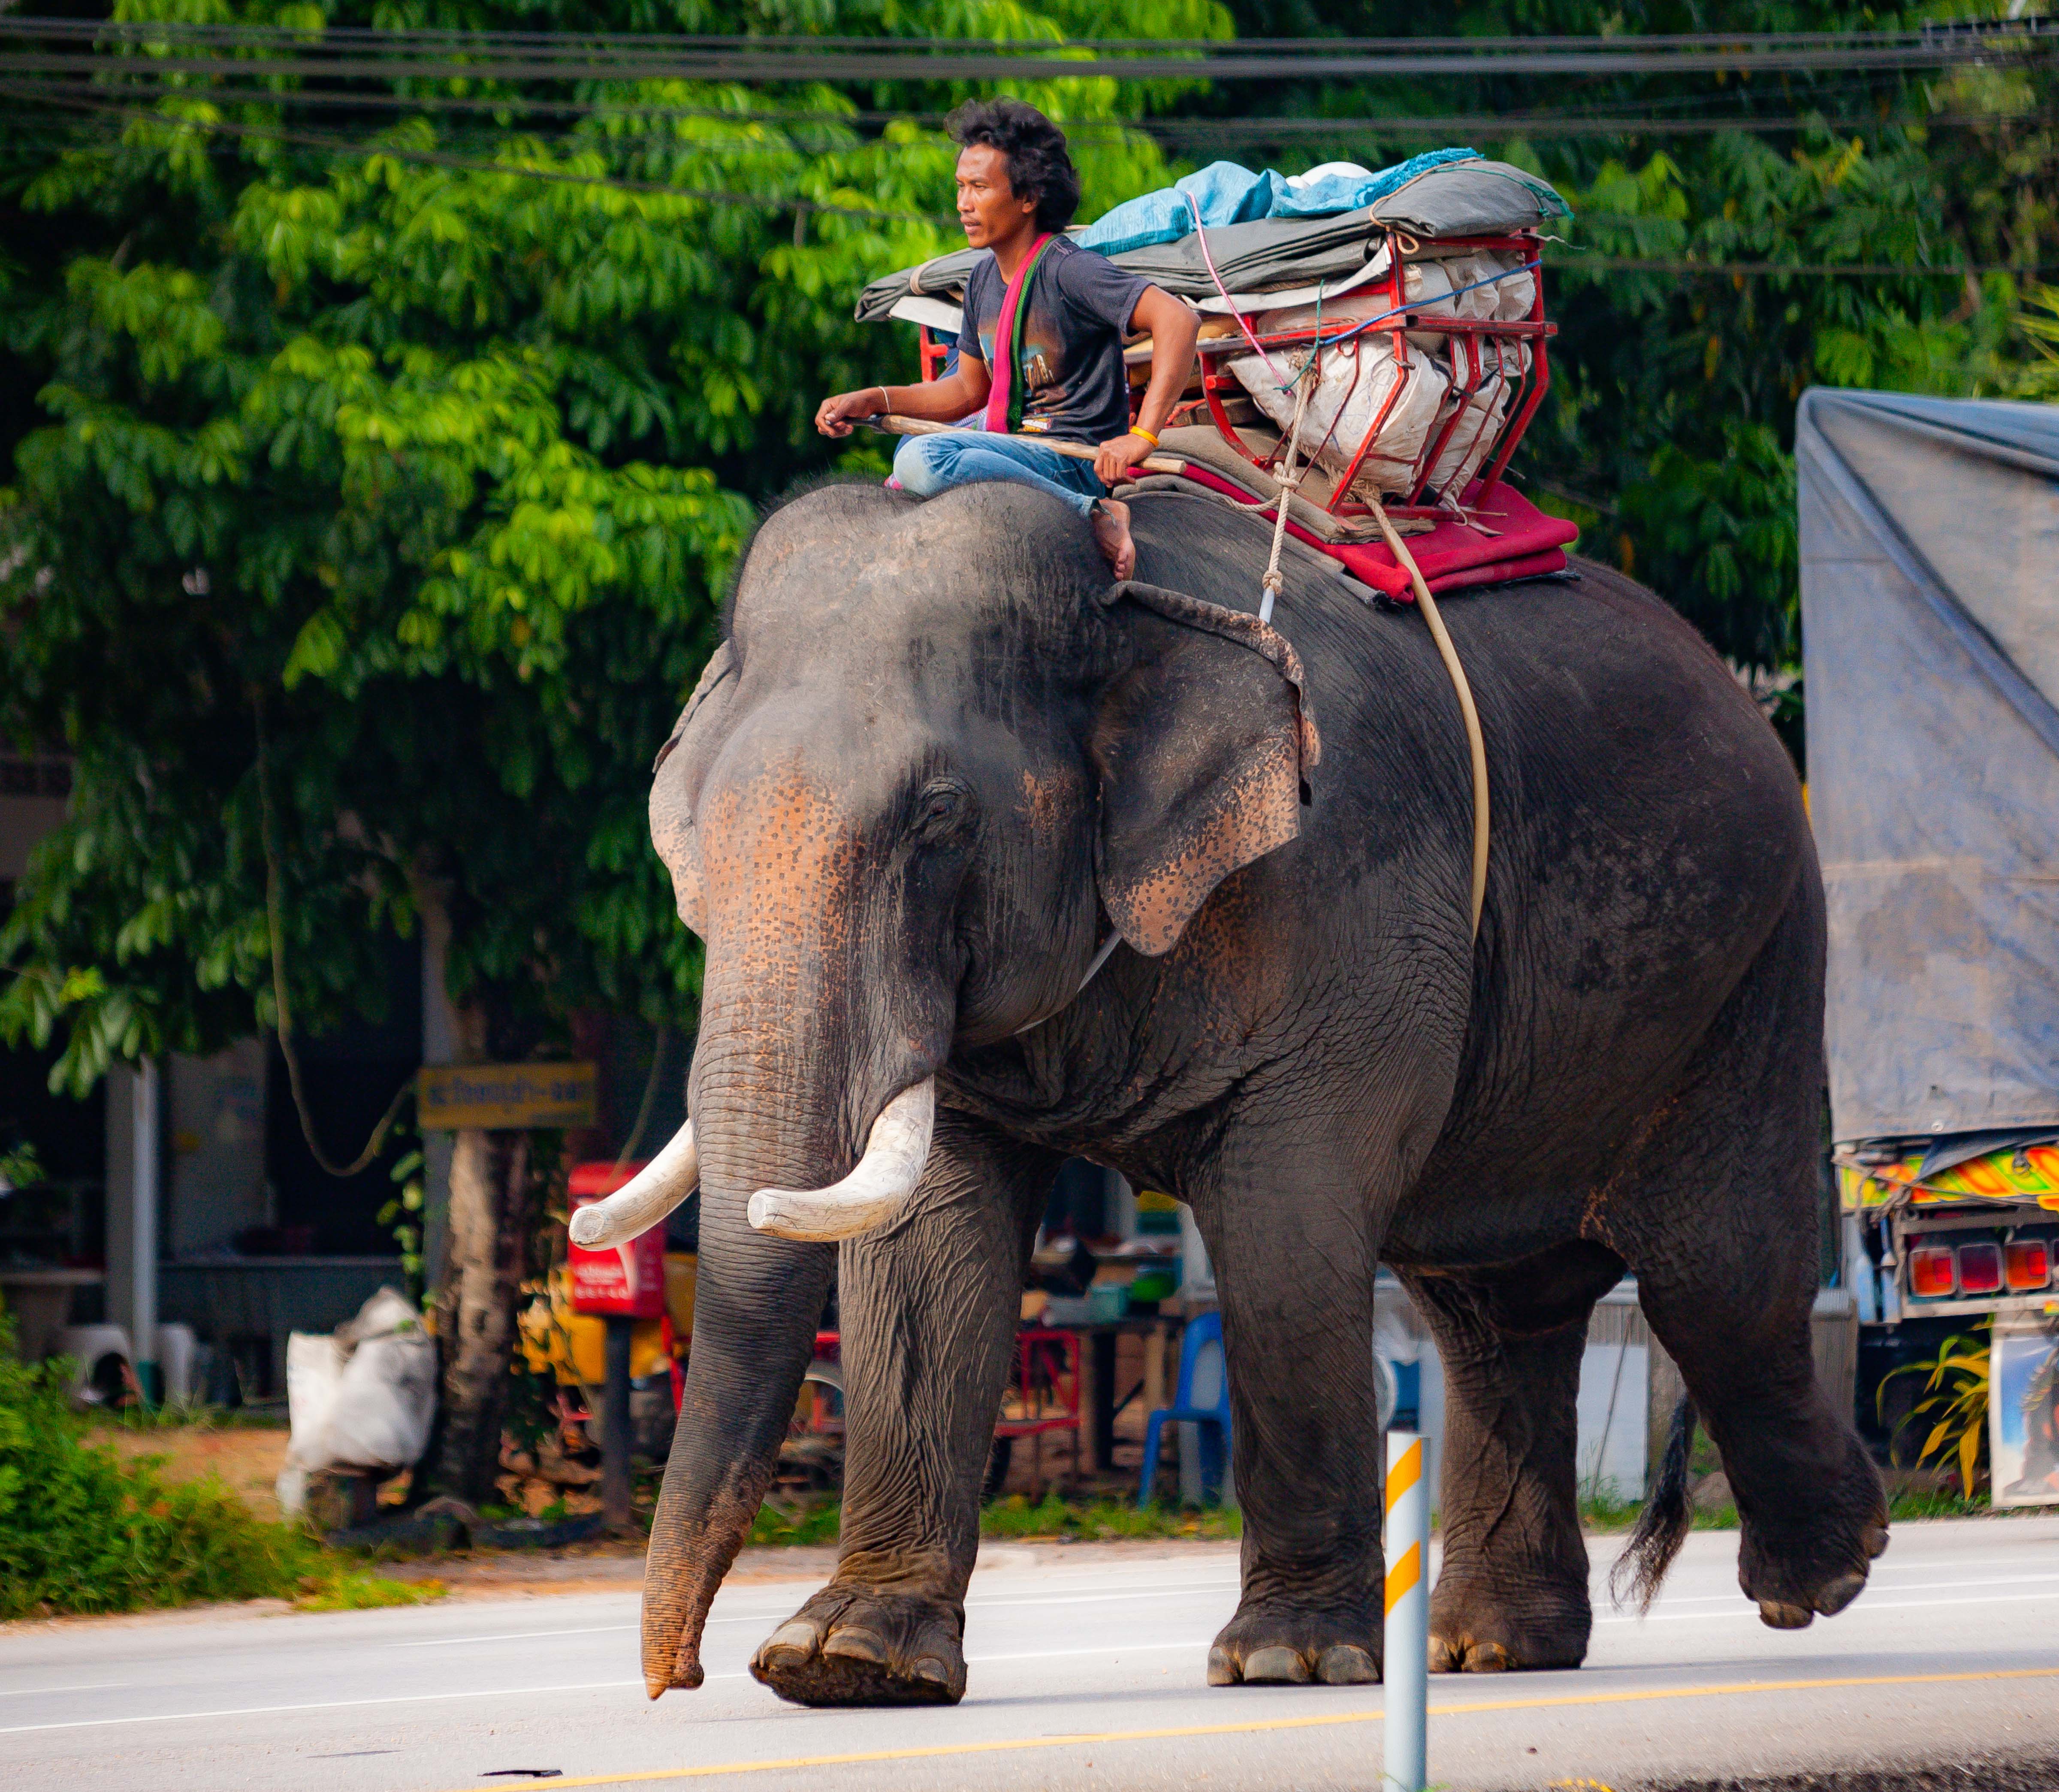 Thailand, Chumphon Prov, Elephant and Rider, 2008, IMG 1414